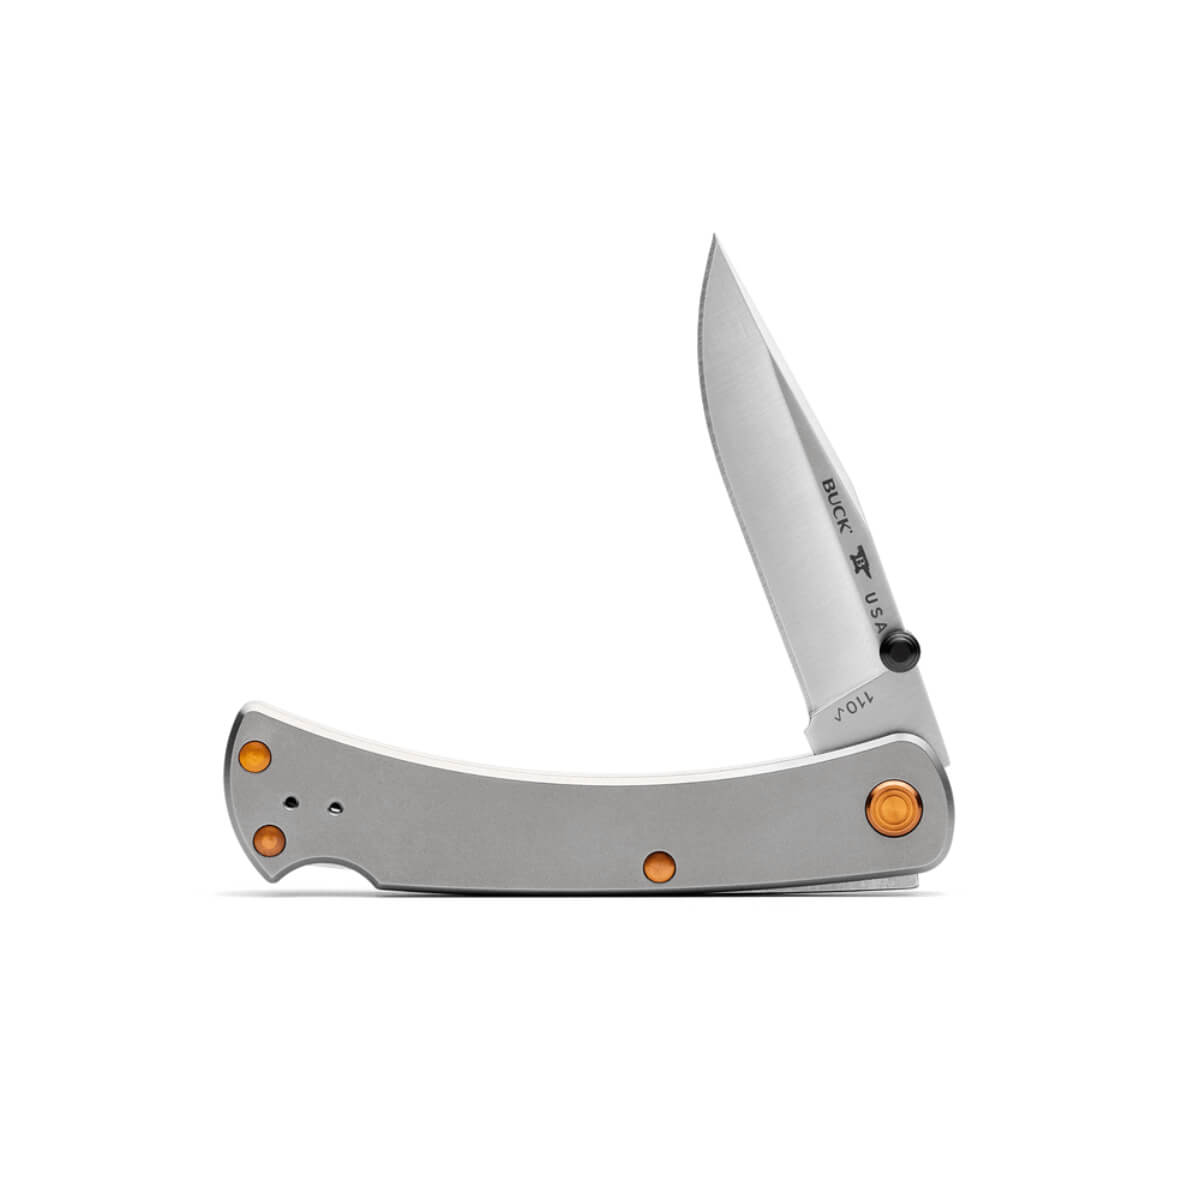 Buck 110 Slim Pro TRX Titanium Knife 2023 Legacy Collection - Limited Edition